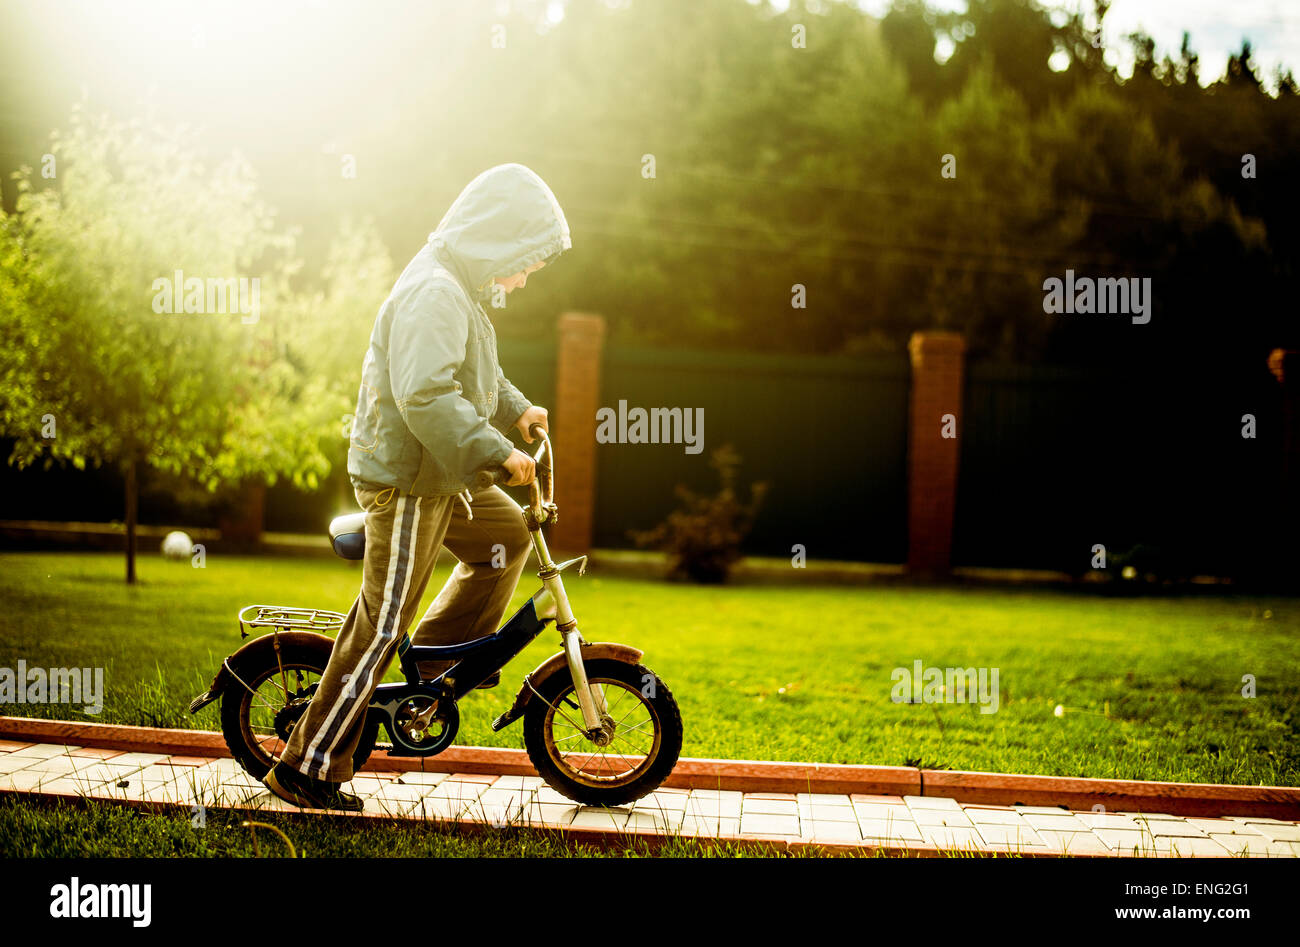 Caucasian boy riding bicycle in backyard Stock Photo